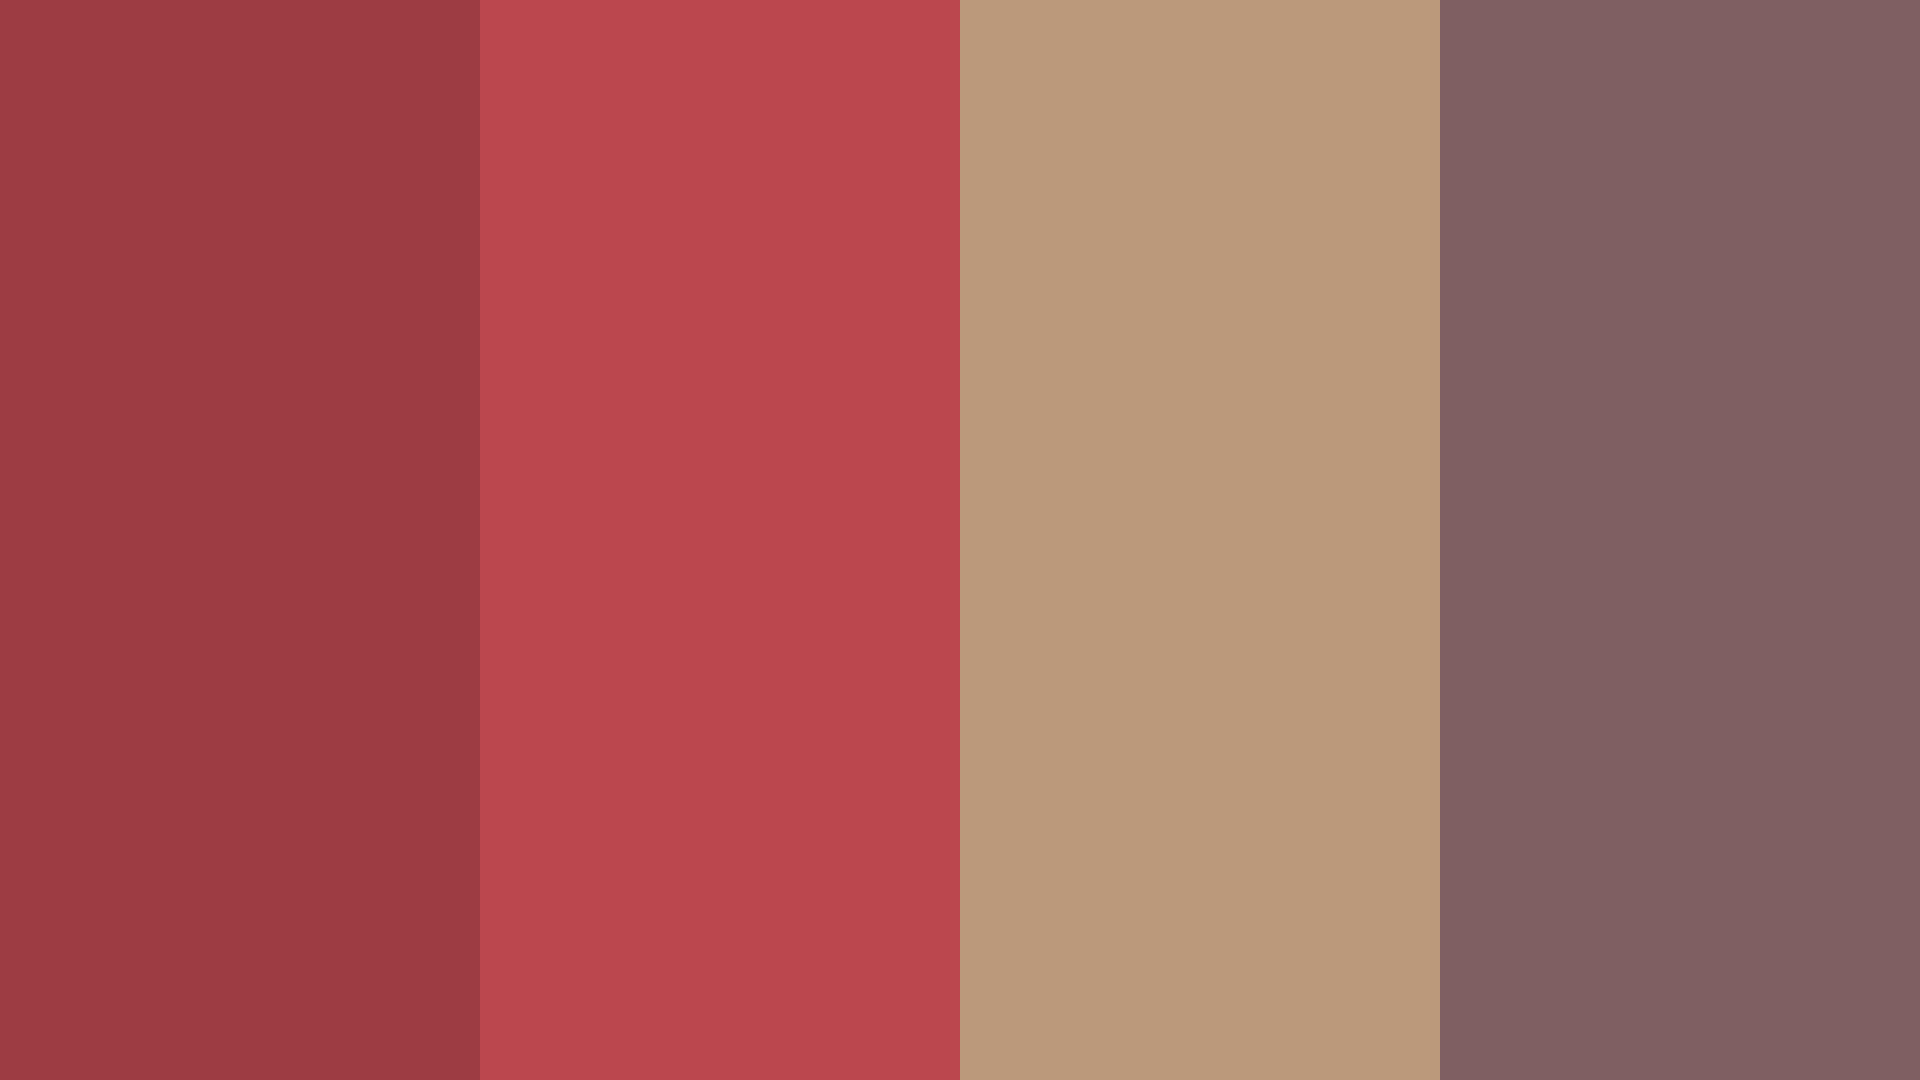 Deep Taupe Color Scheme » Brown »